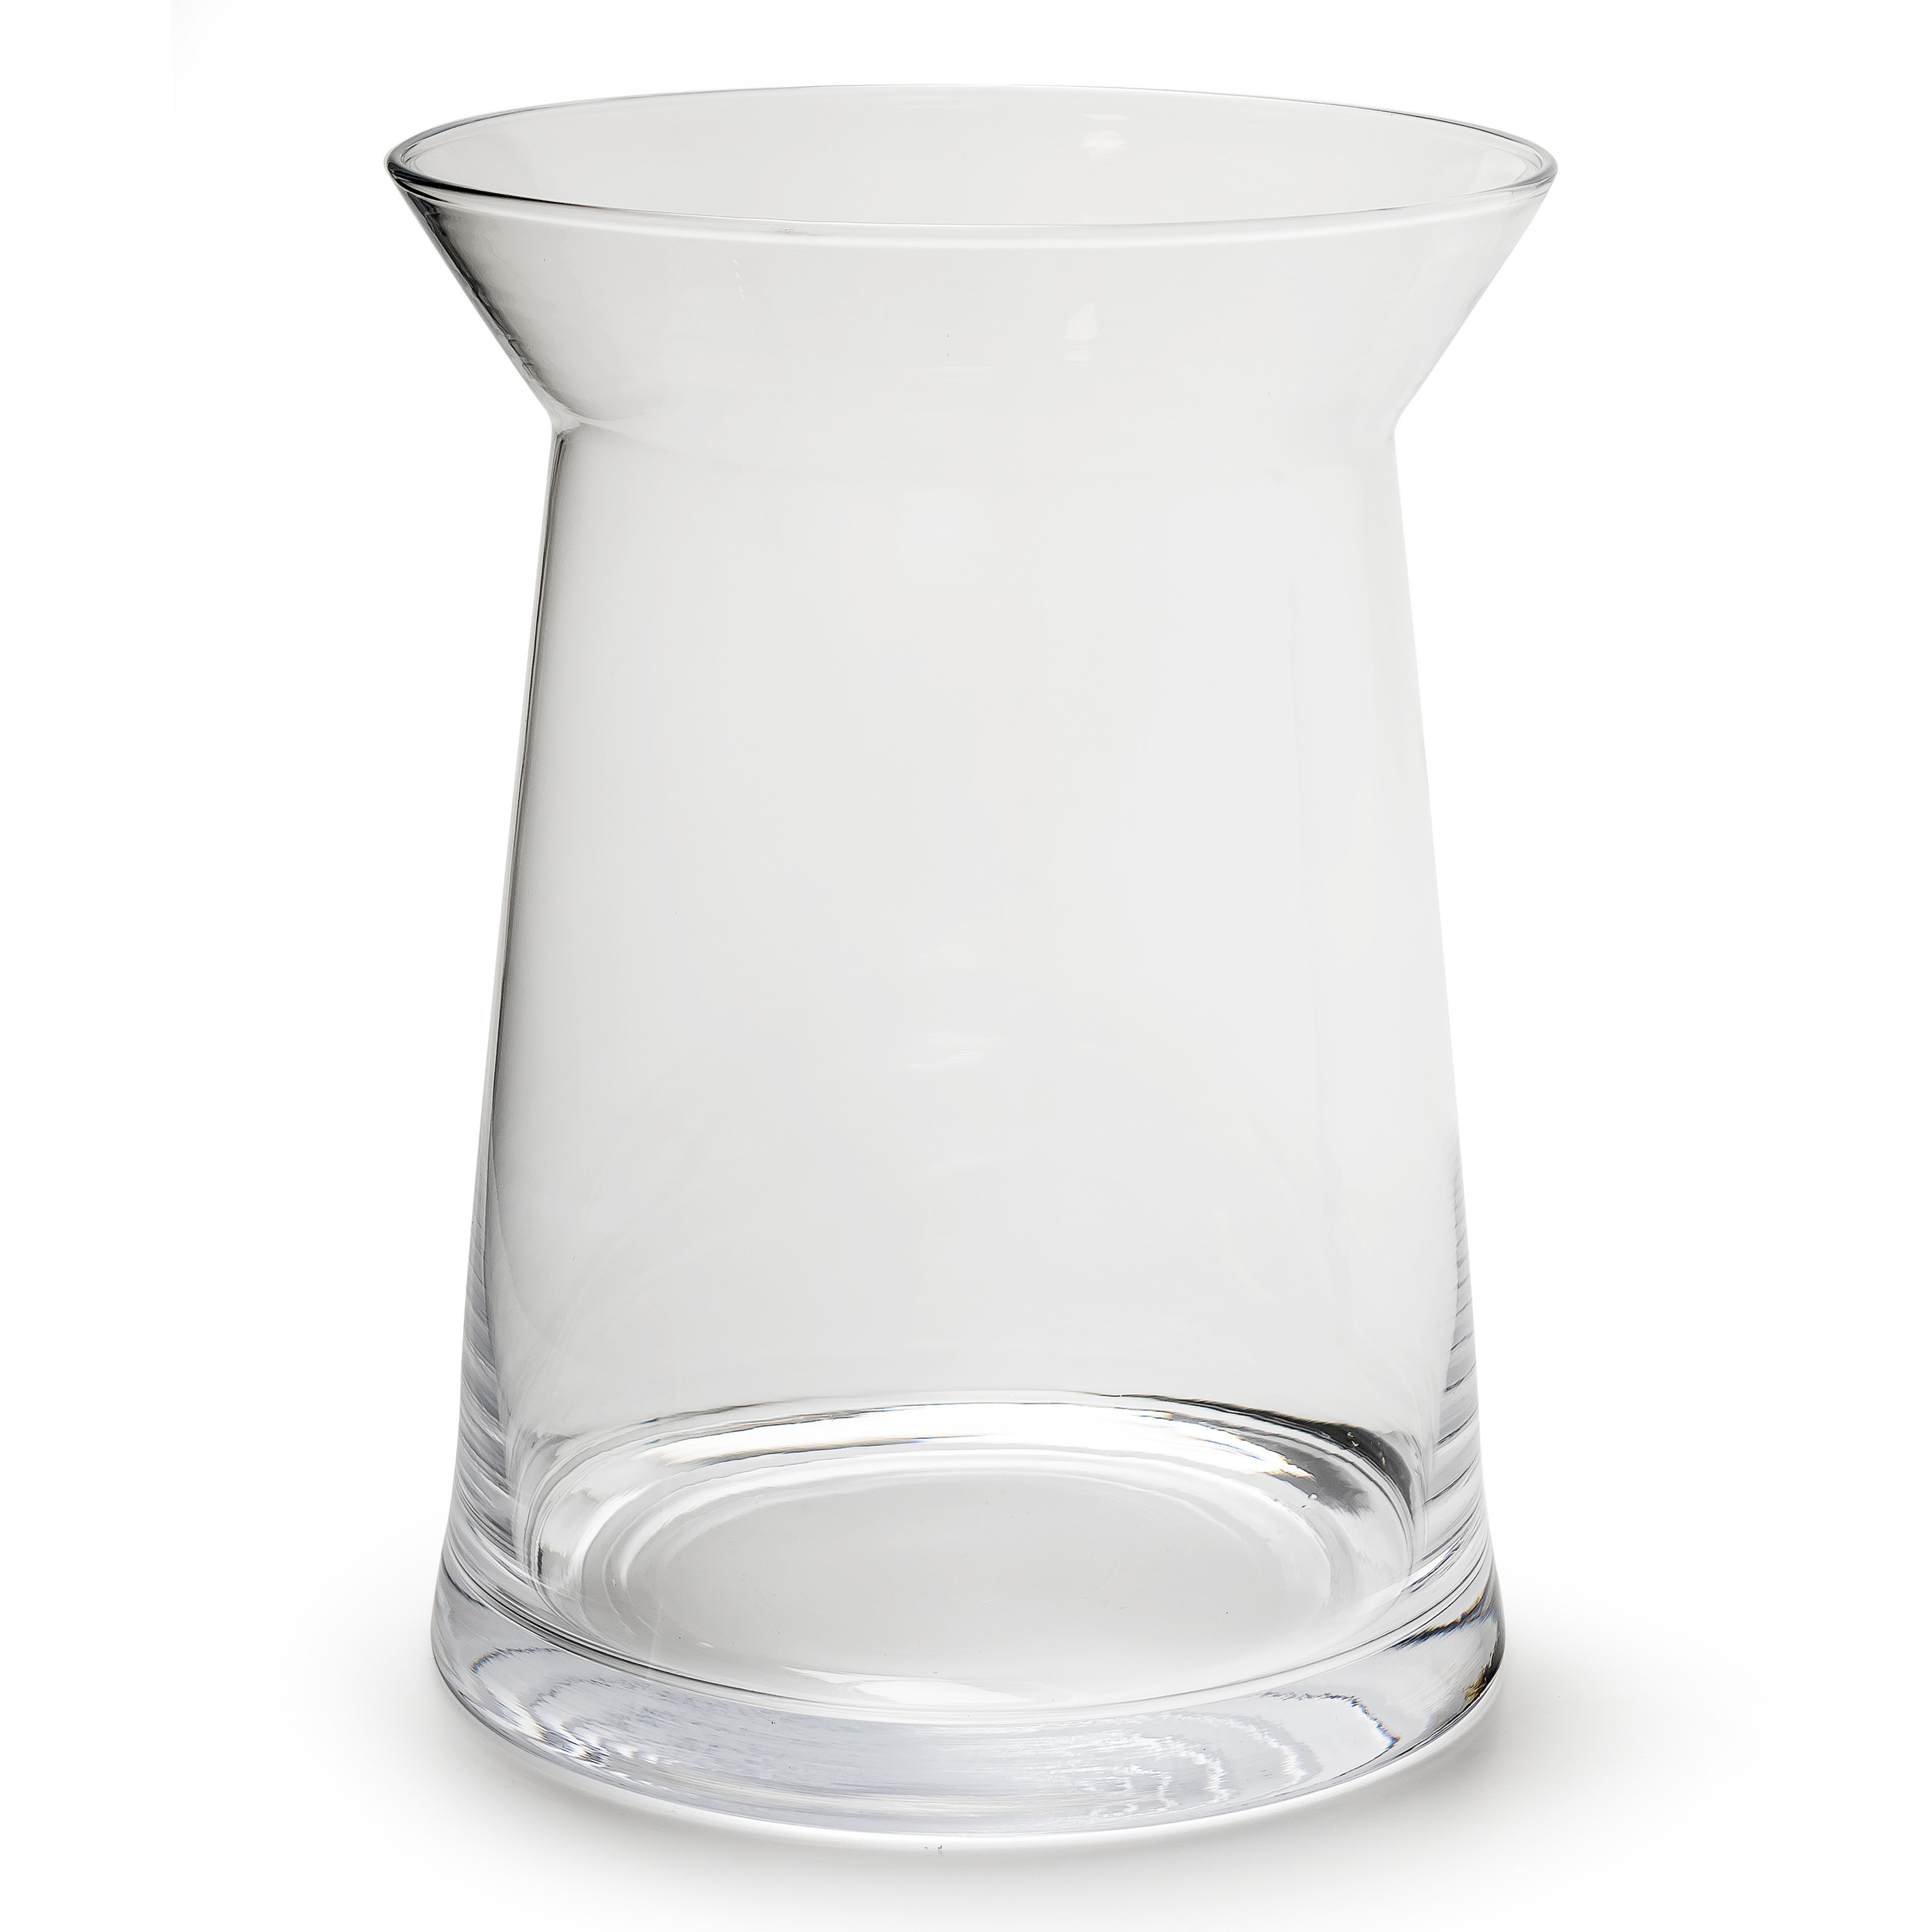 Merkloos Transparante trechter vaas/vazen van glas 23 x 30 cm -